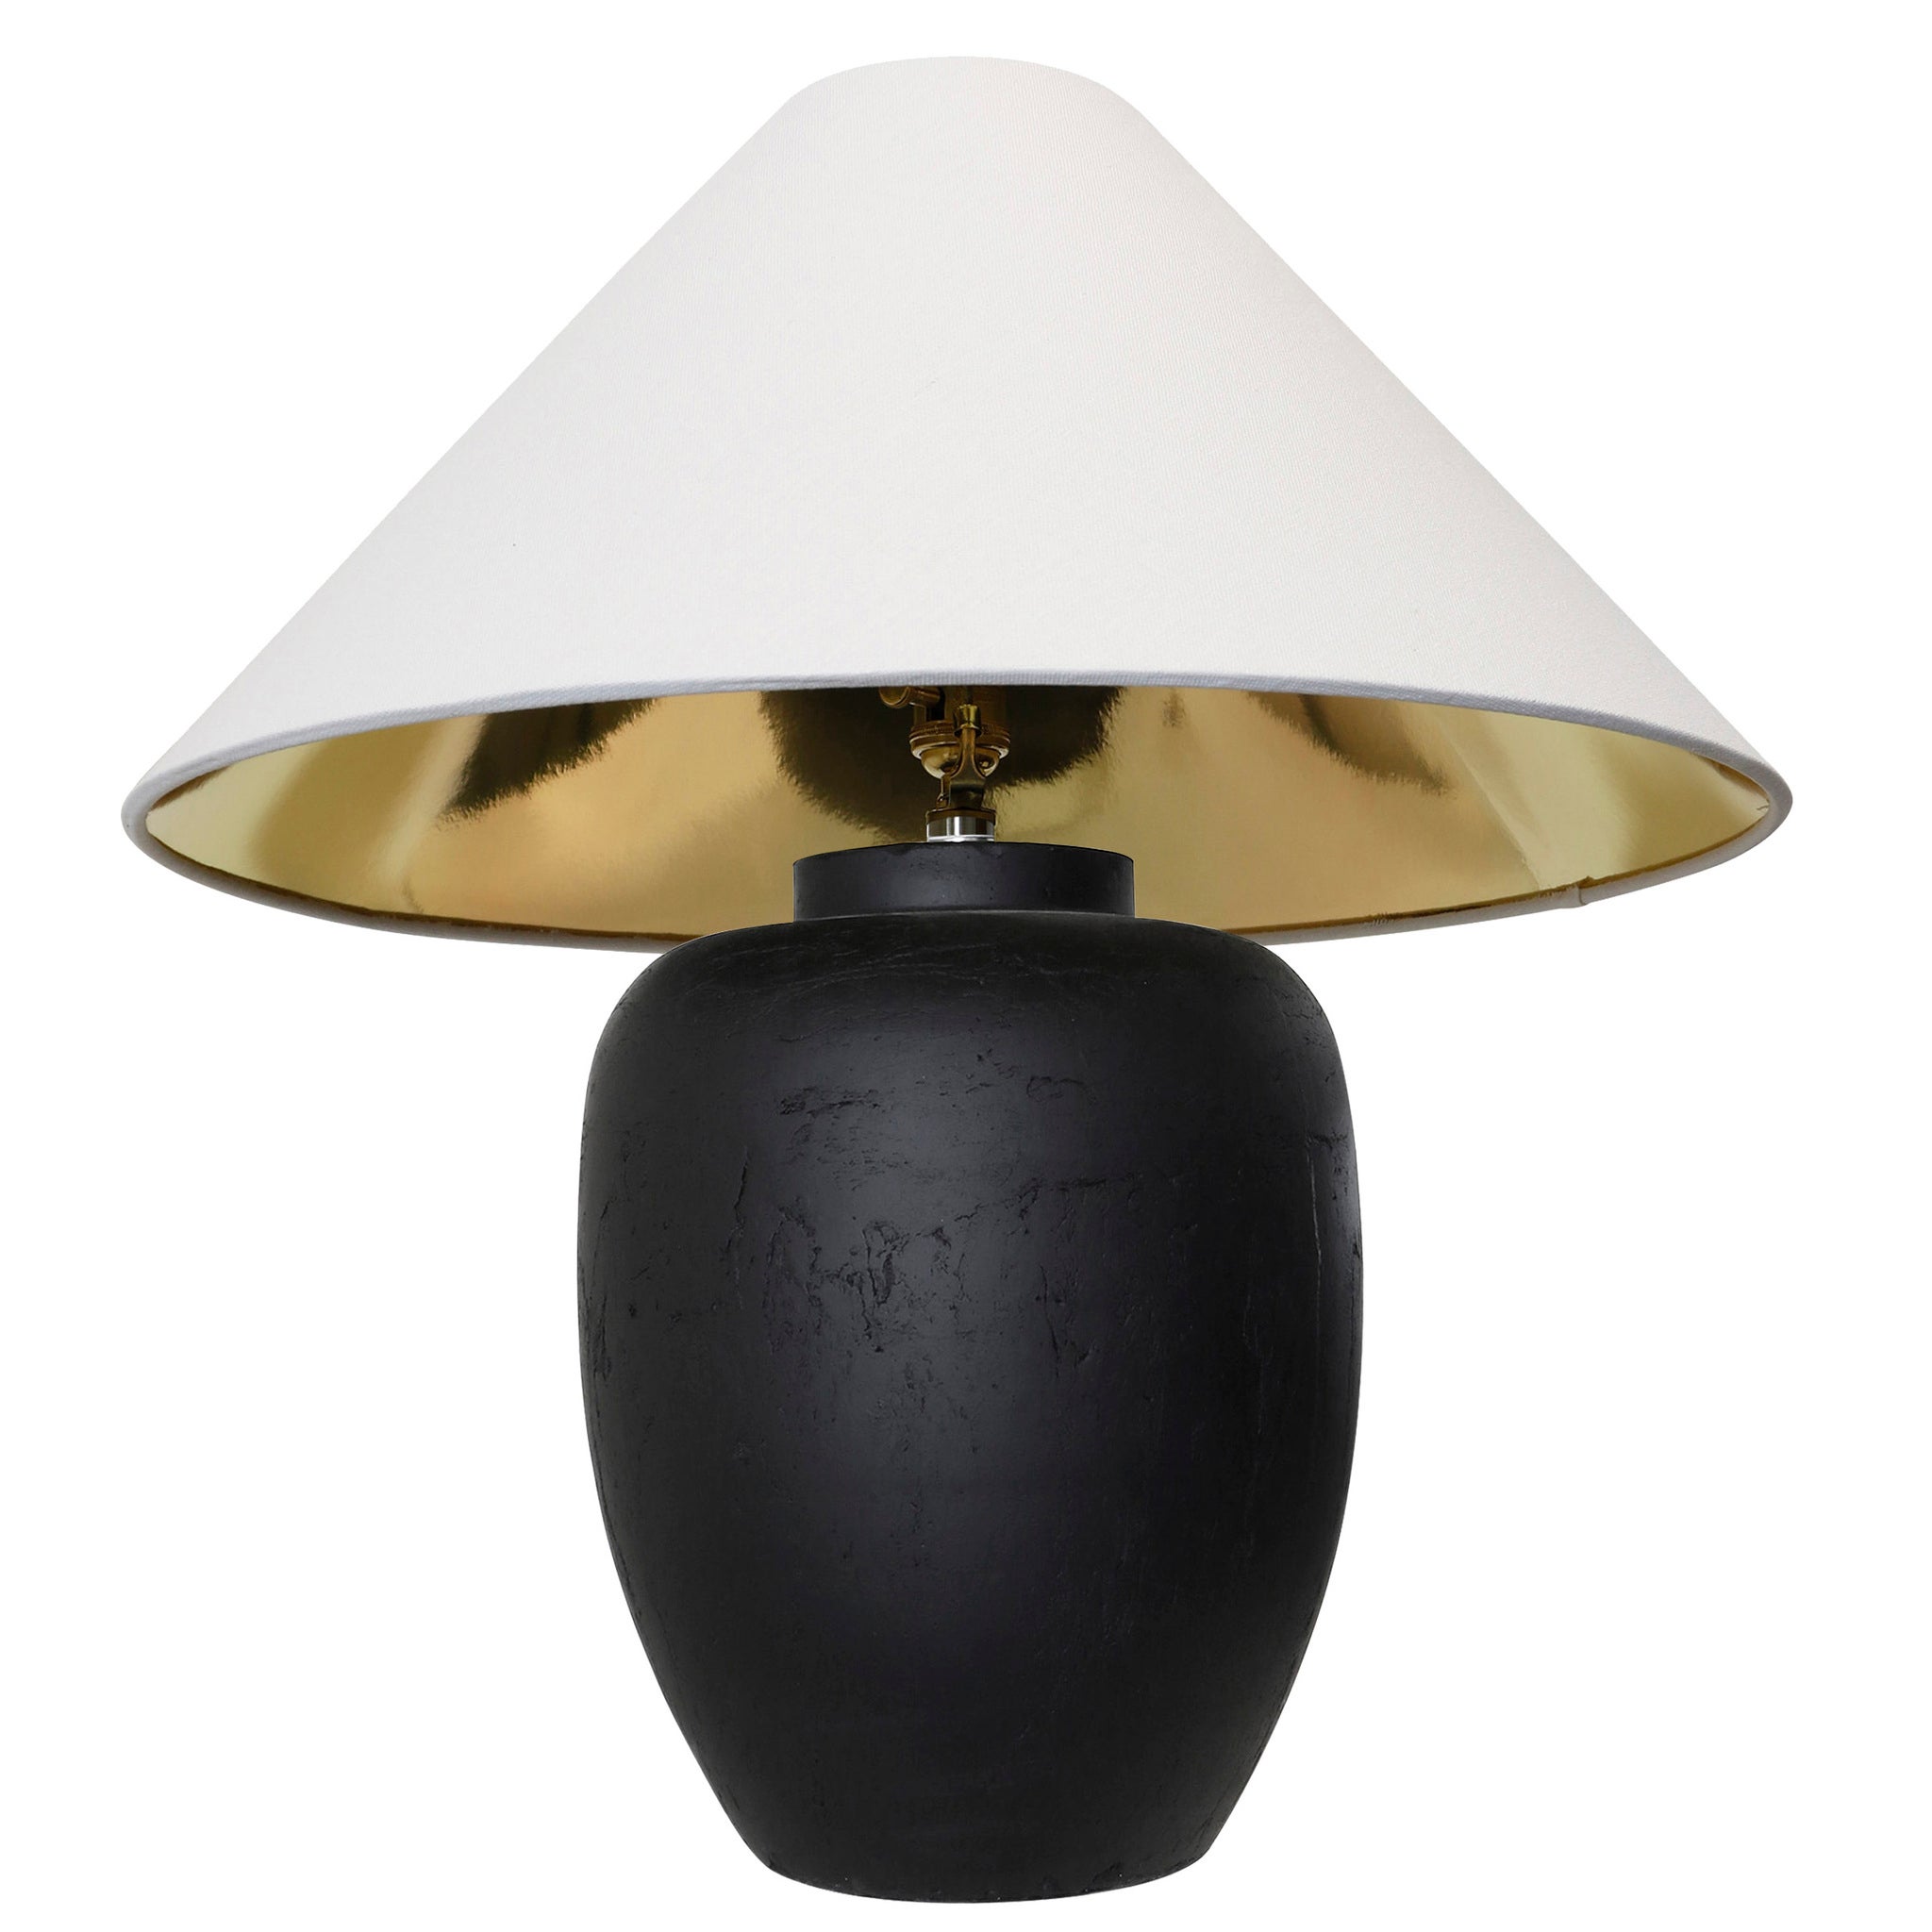 SABIAN TABLE LAMP | Matte Black Finish on Ceramic Body | Empire Gold Lined  Hardback Shade - all lighting | Harpu0026Finial